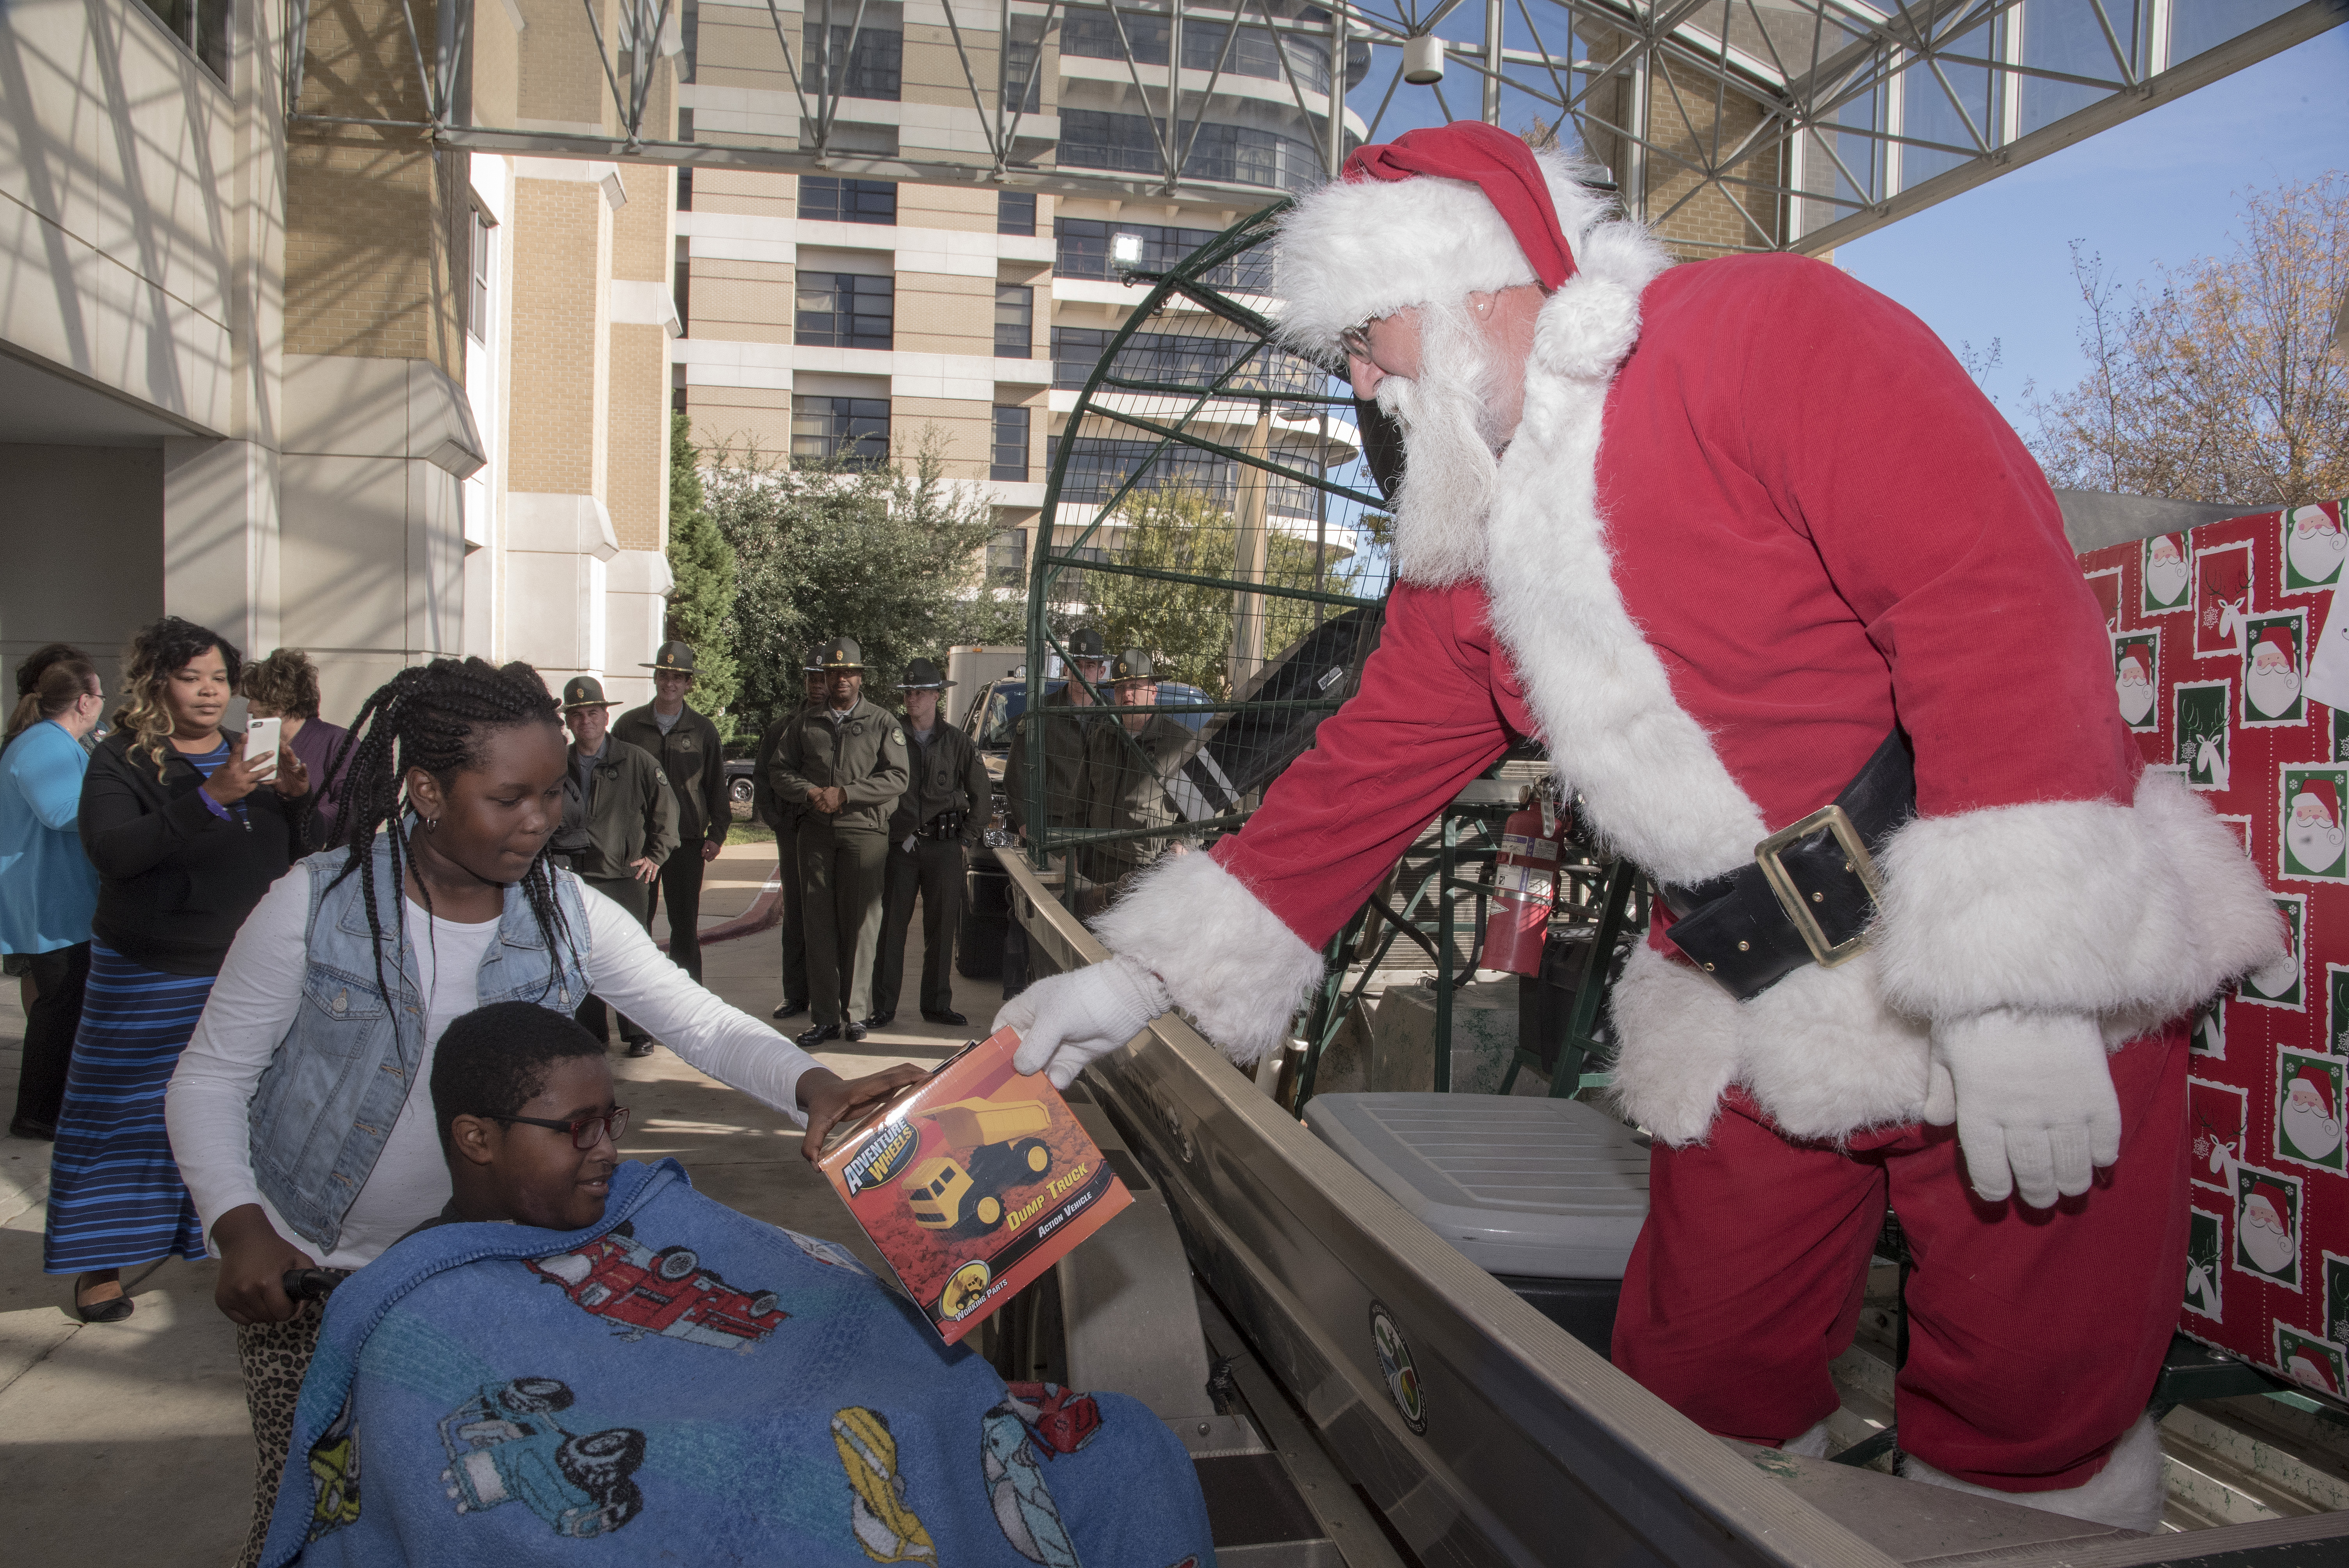 MDWFP officers, Santa wrap up Christmas for Batson